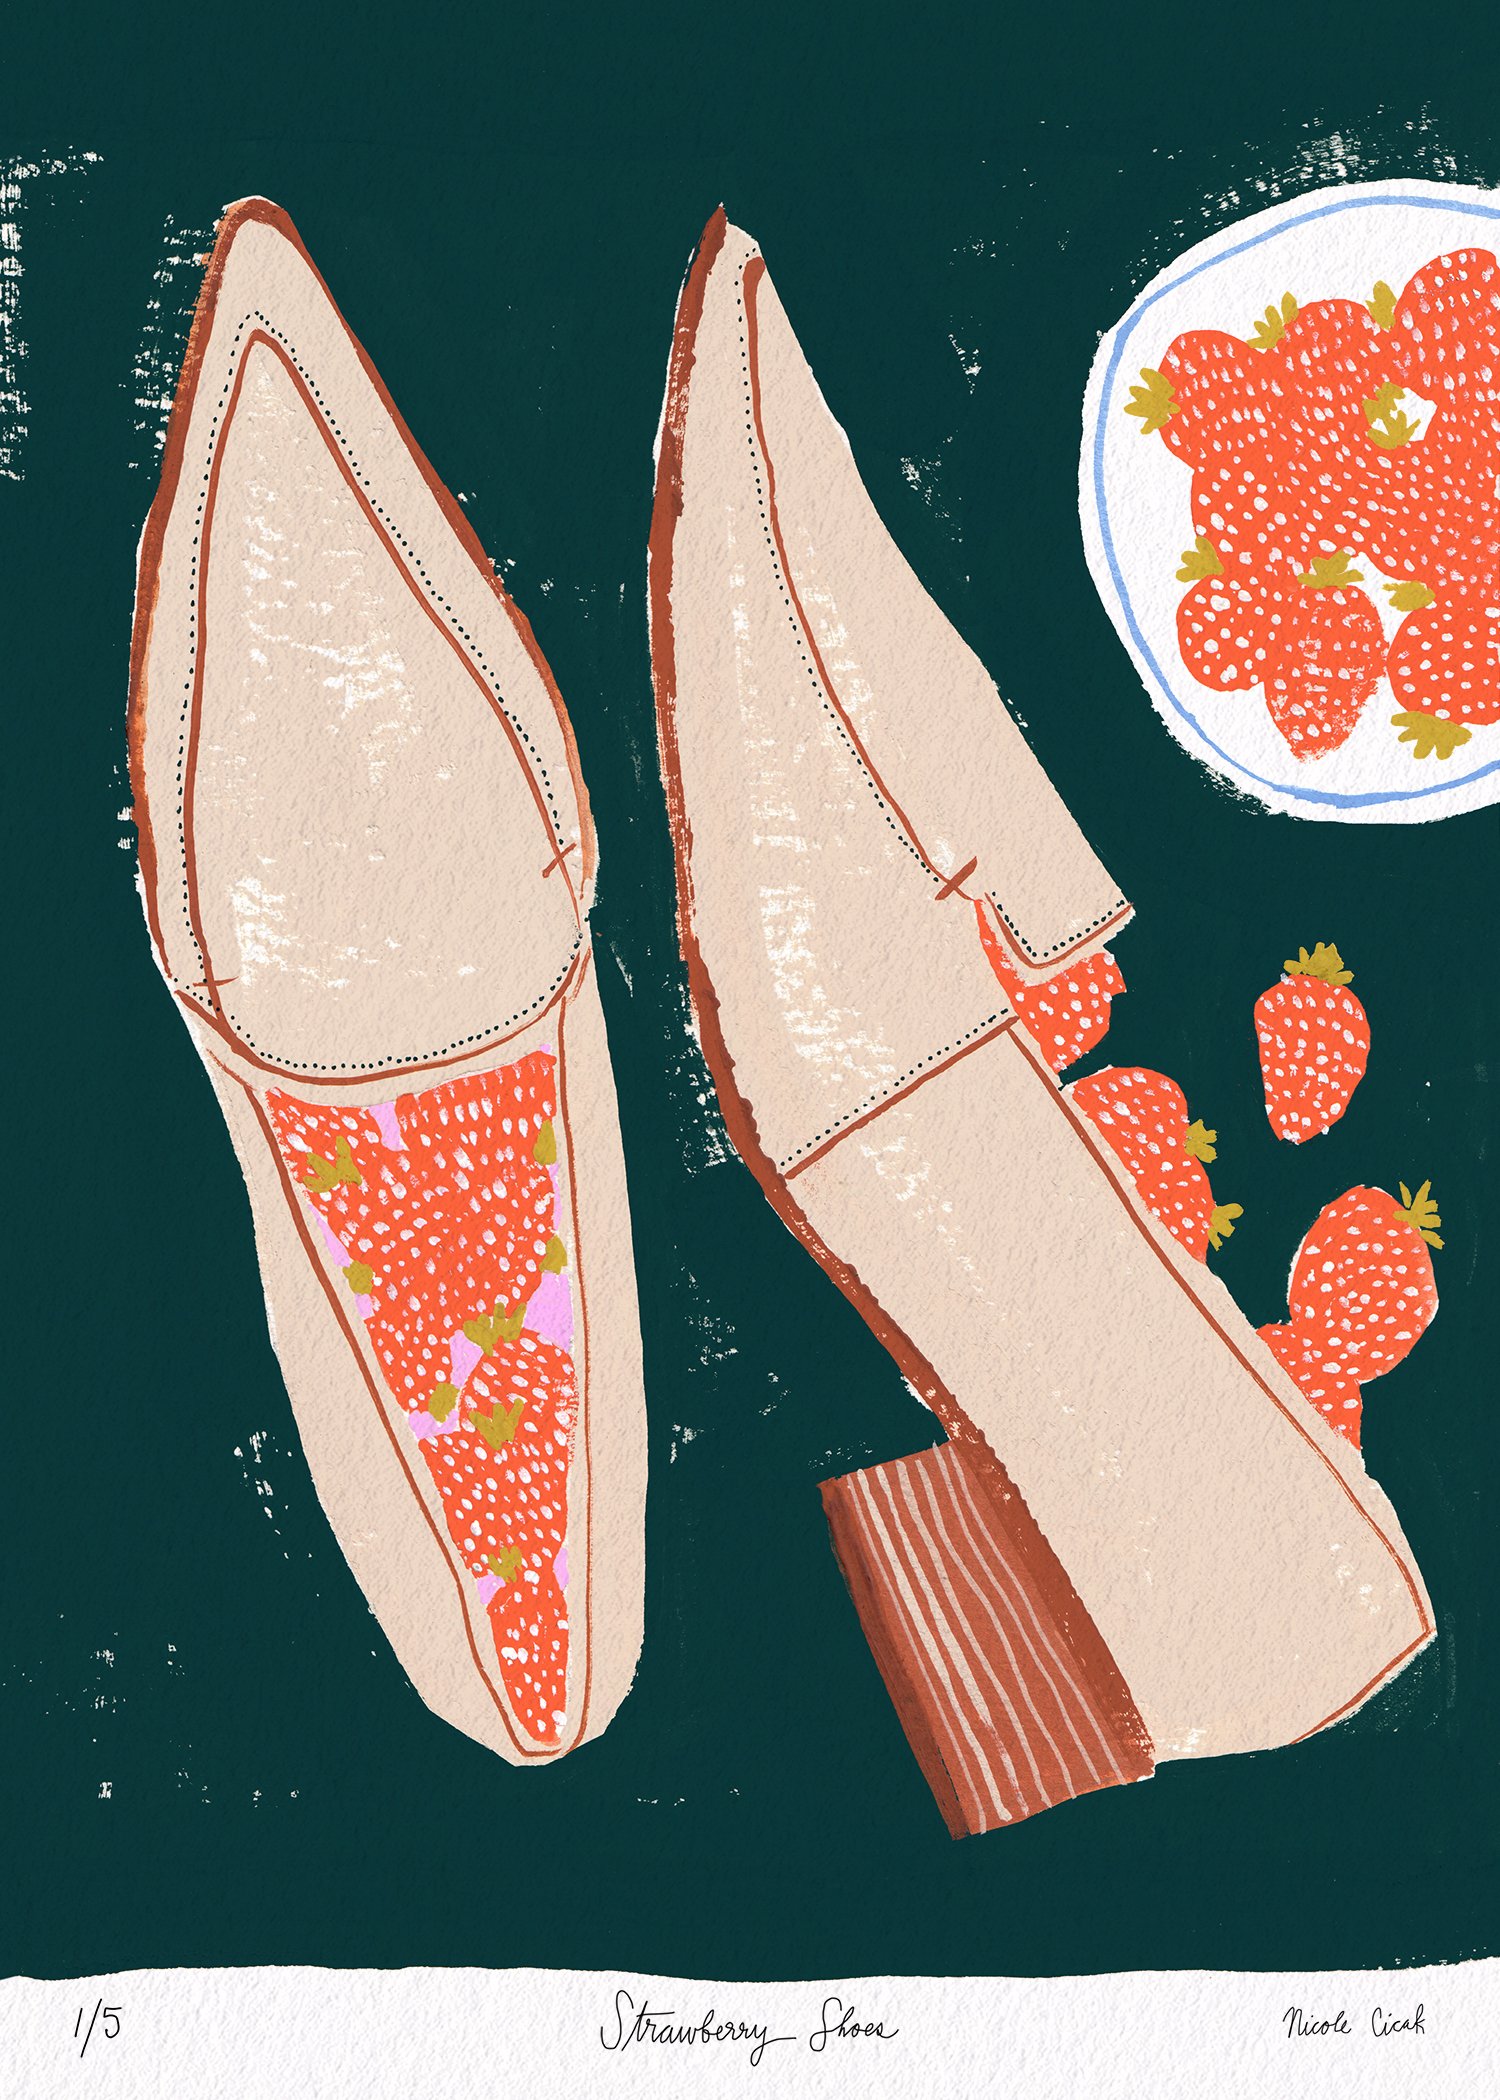 Strawberry Shoes_5x7_Instagram.jpg